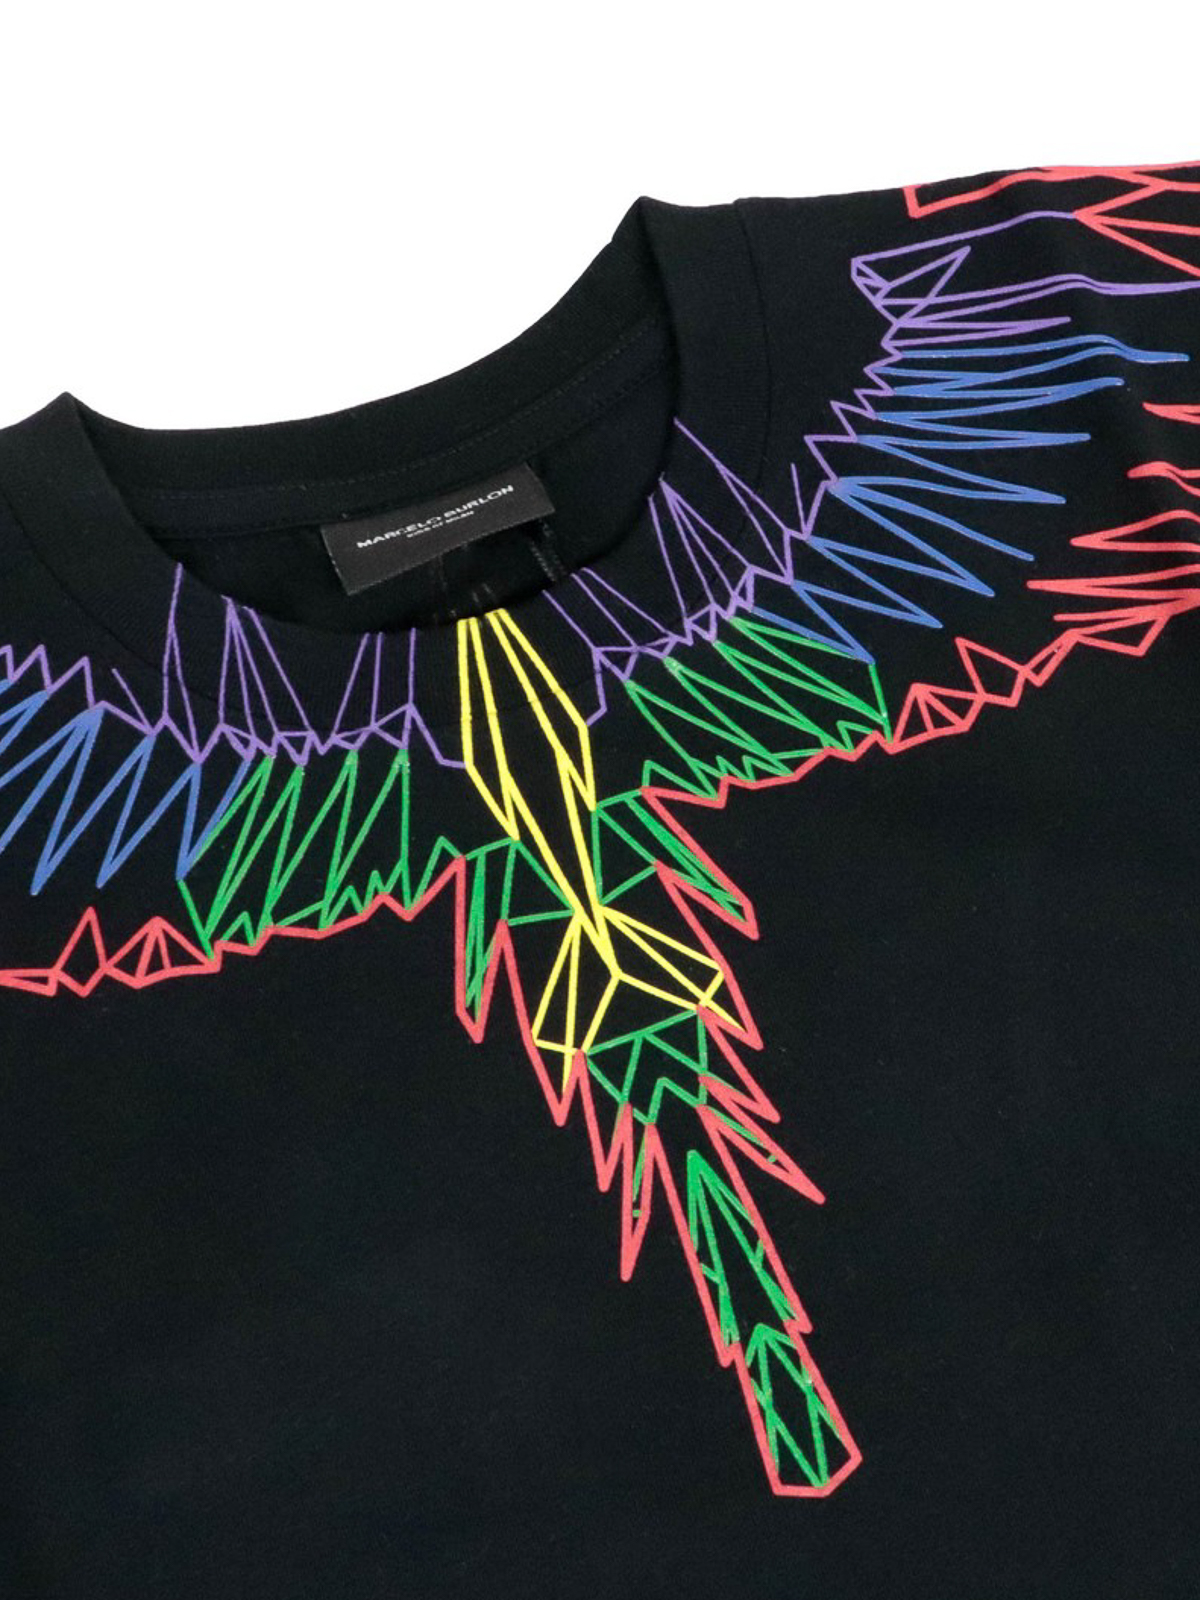 Marcelo Burlon Kids Roller Coaster T-shirt, Size 10Y 1108-0010